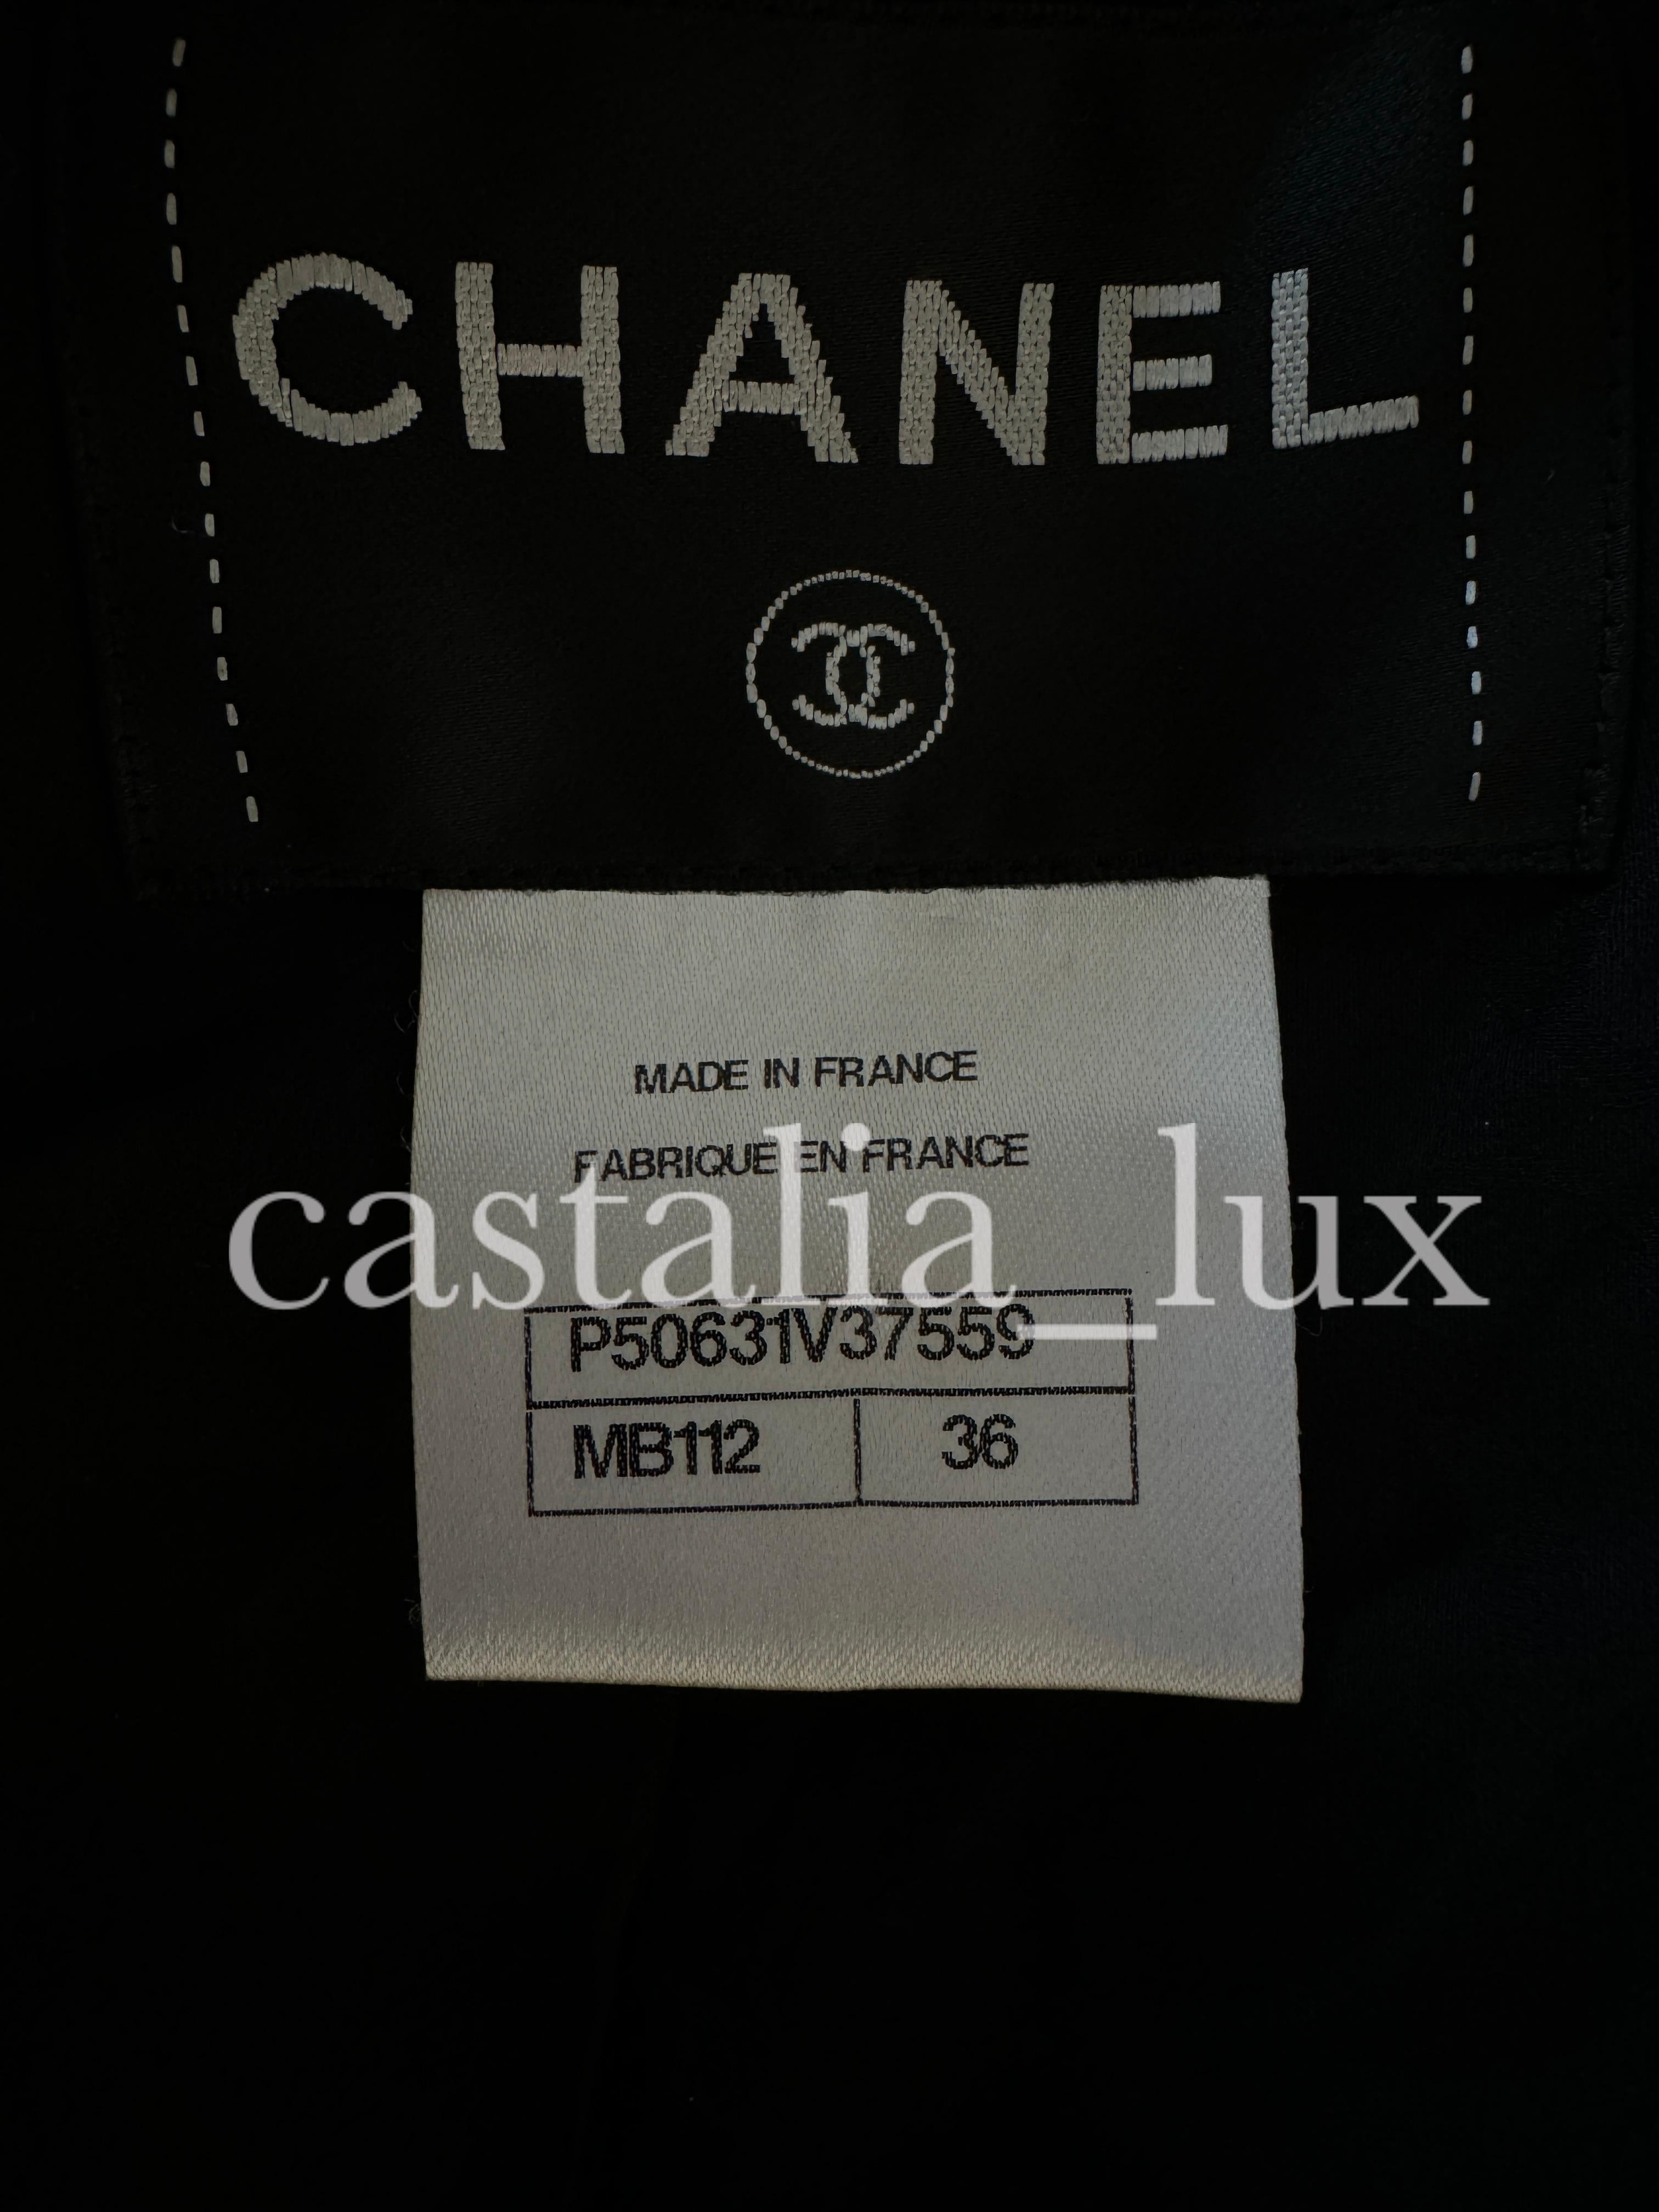 Chanel New 9K Iconic Gigi Hadid Style Tweed Jacket (veste en tweed) en vente 16